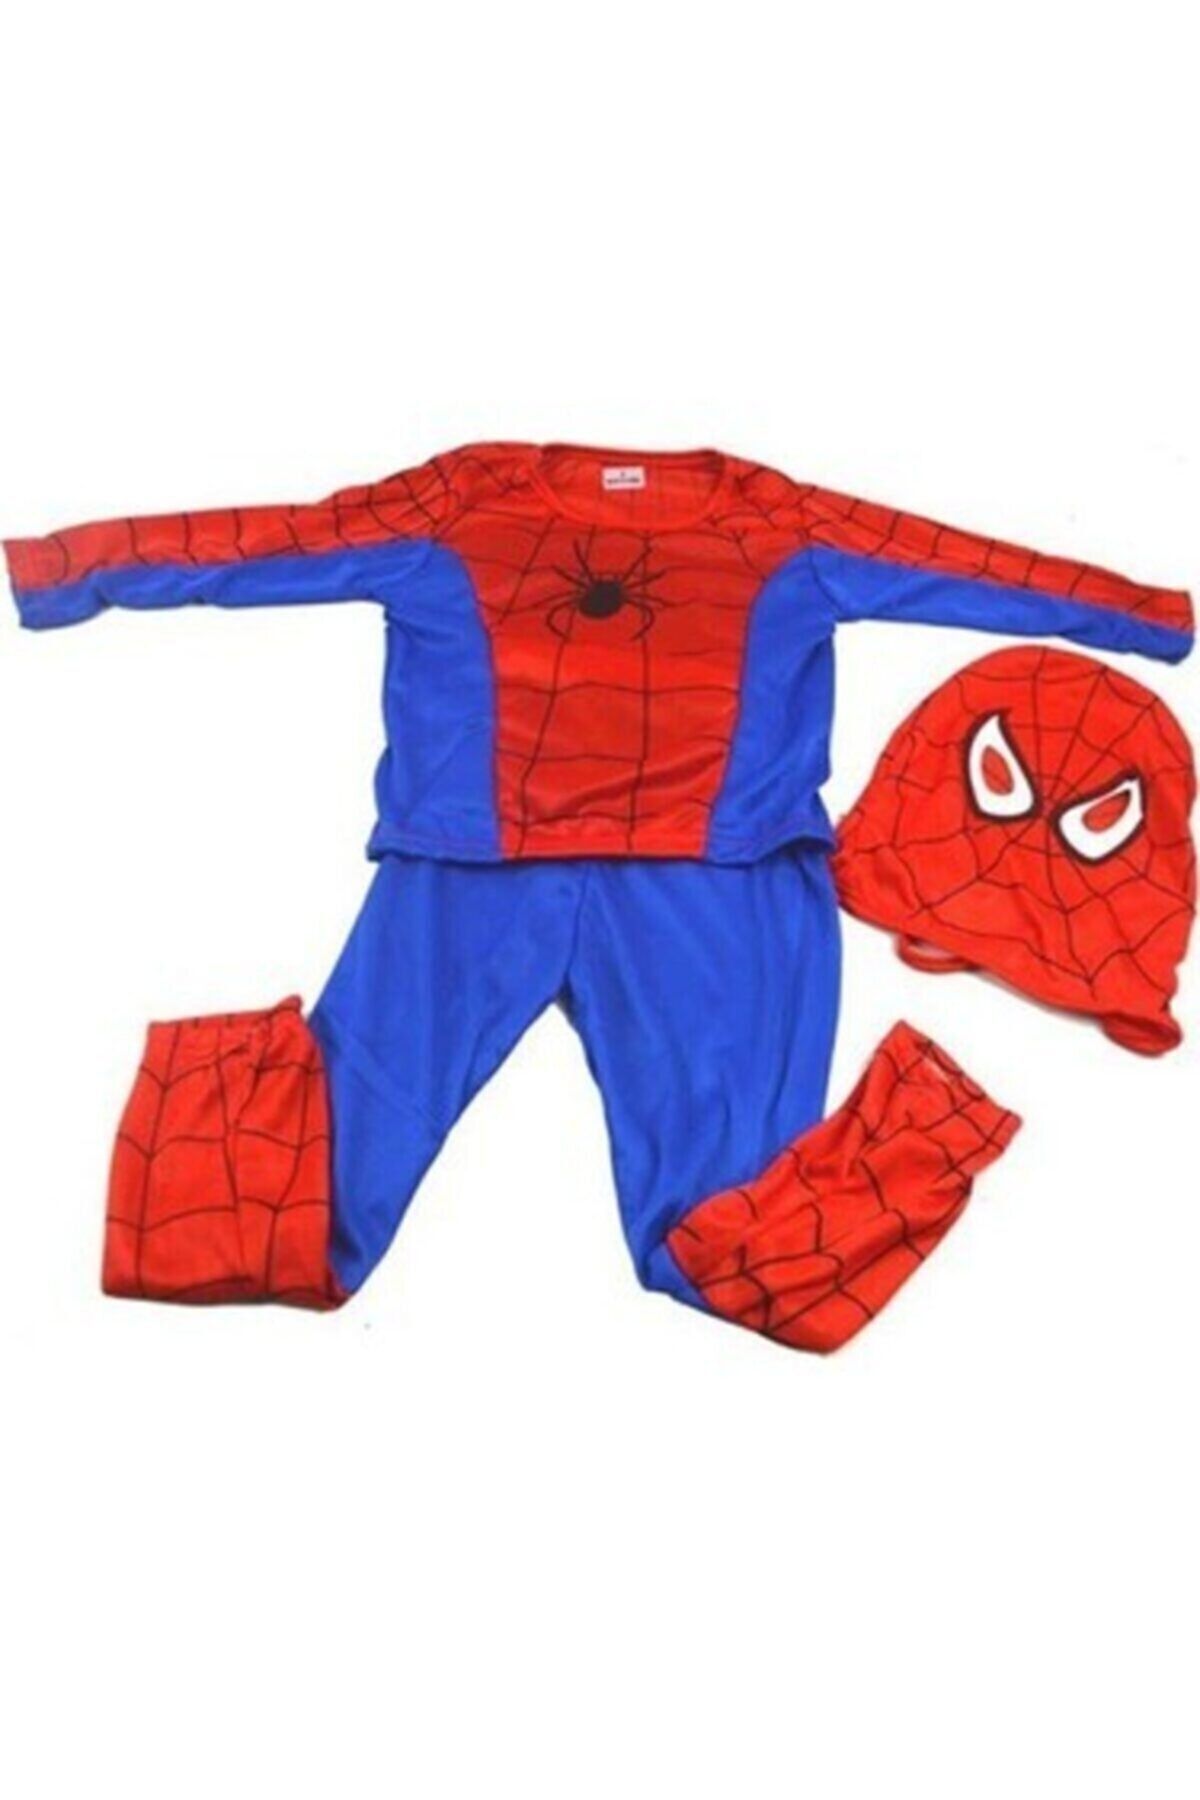 DİSNEY Spıderman Kostüm 7 - 8 Yaş Spiderman Kostümü - Örümcek Adam Spider Man Parti Kostüm